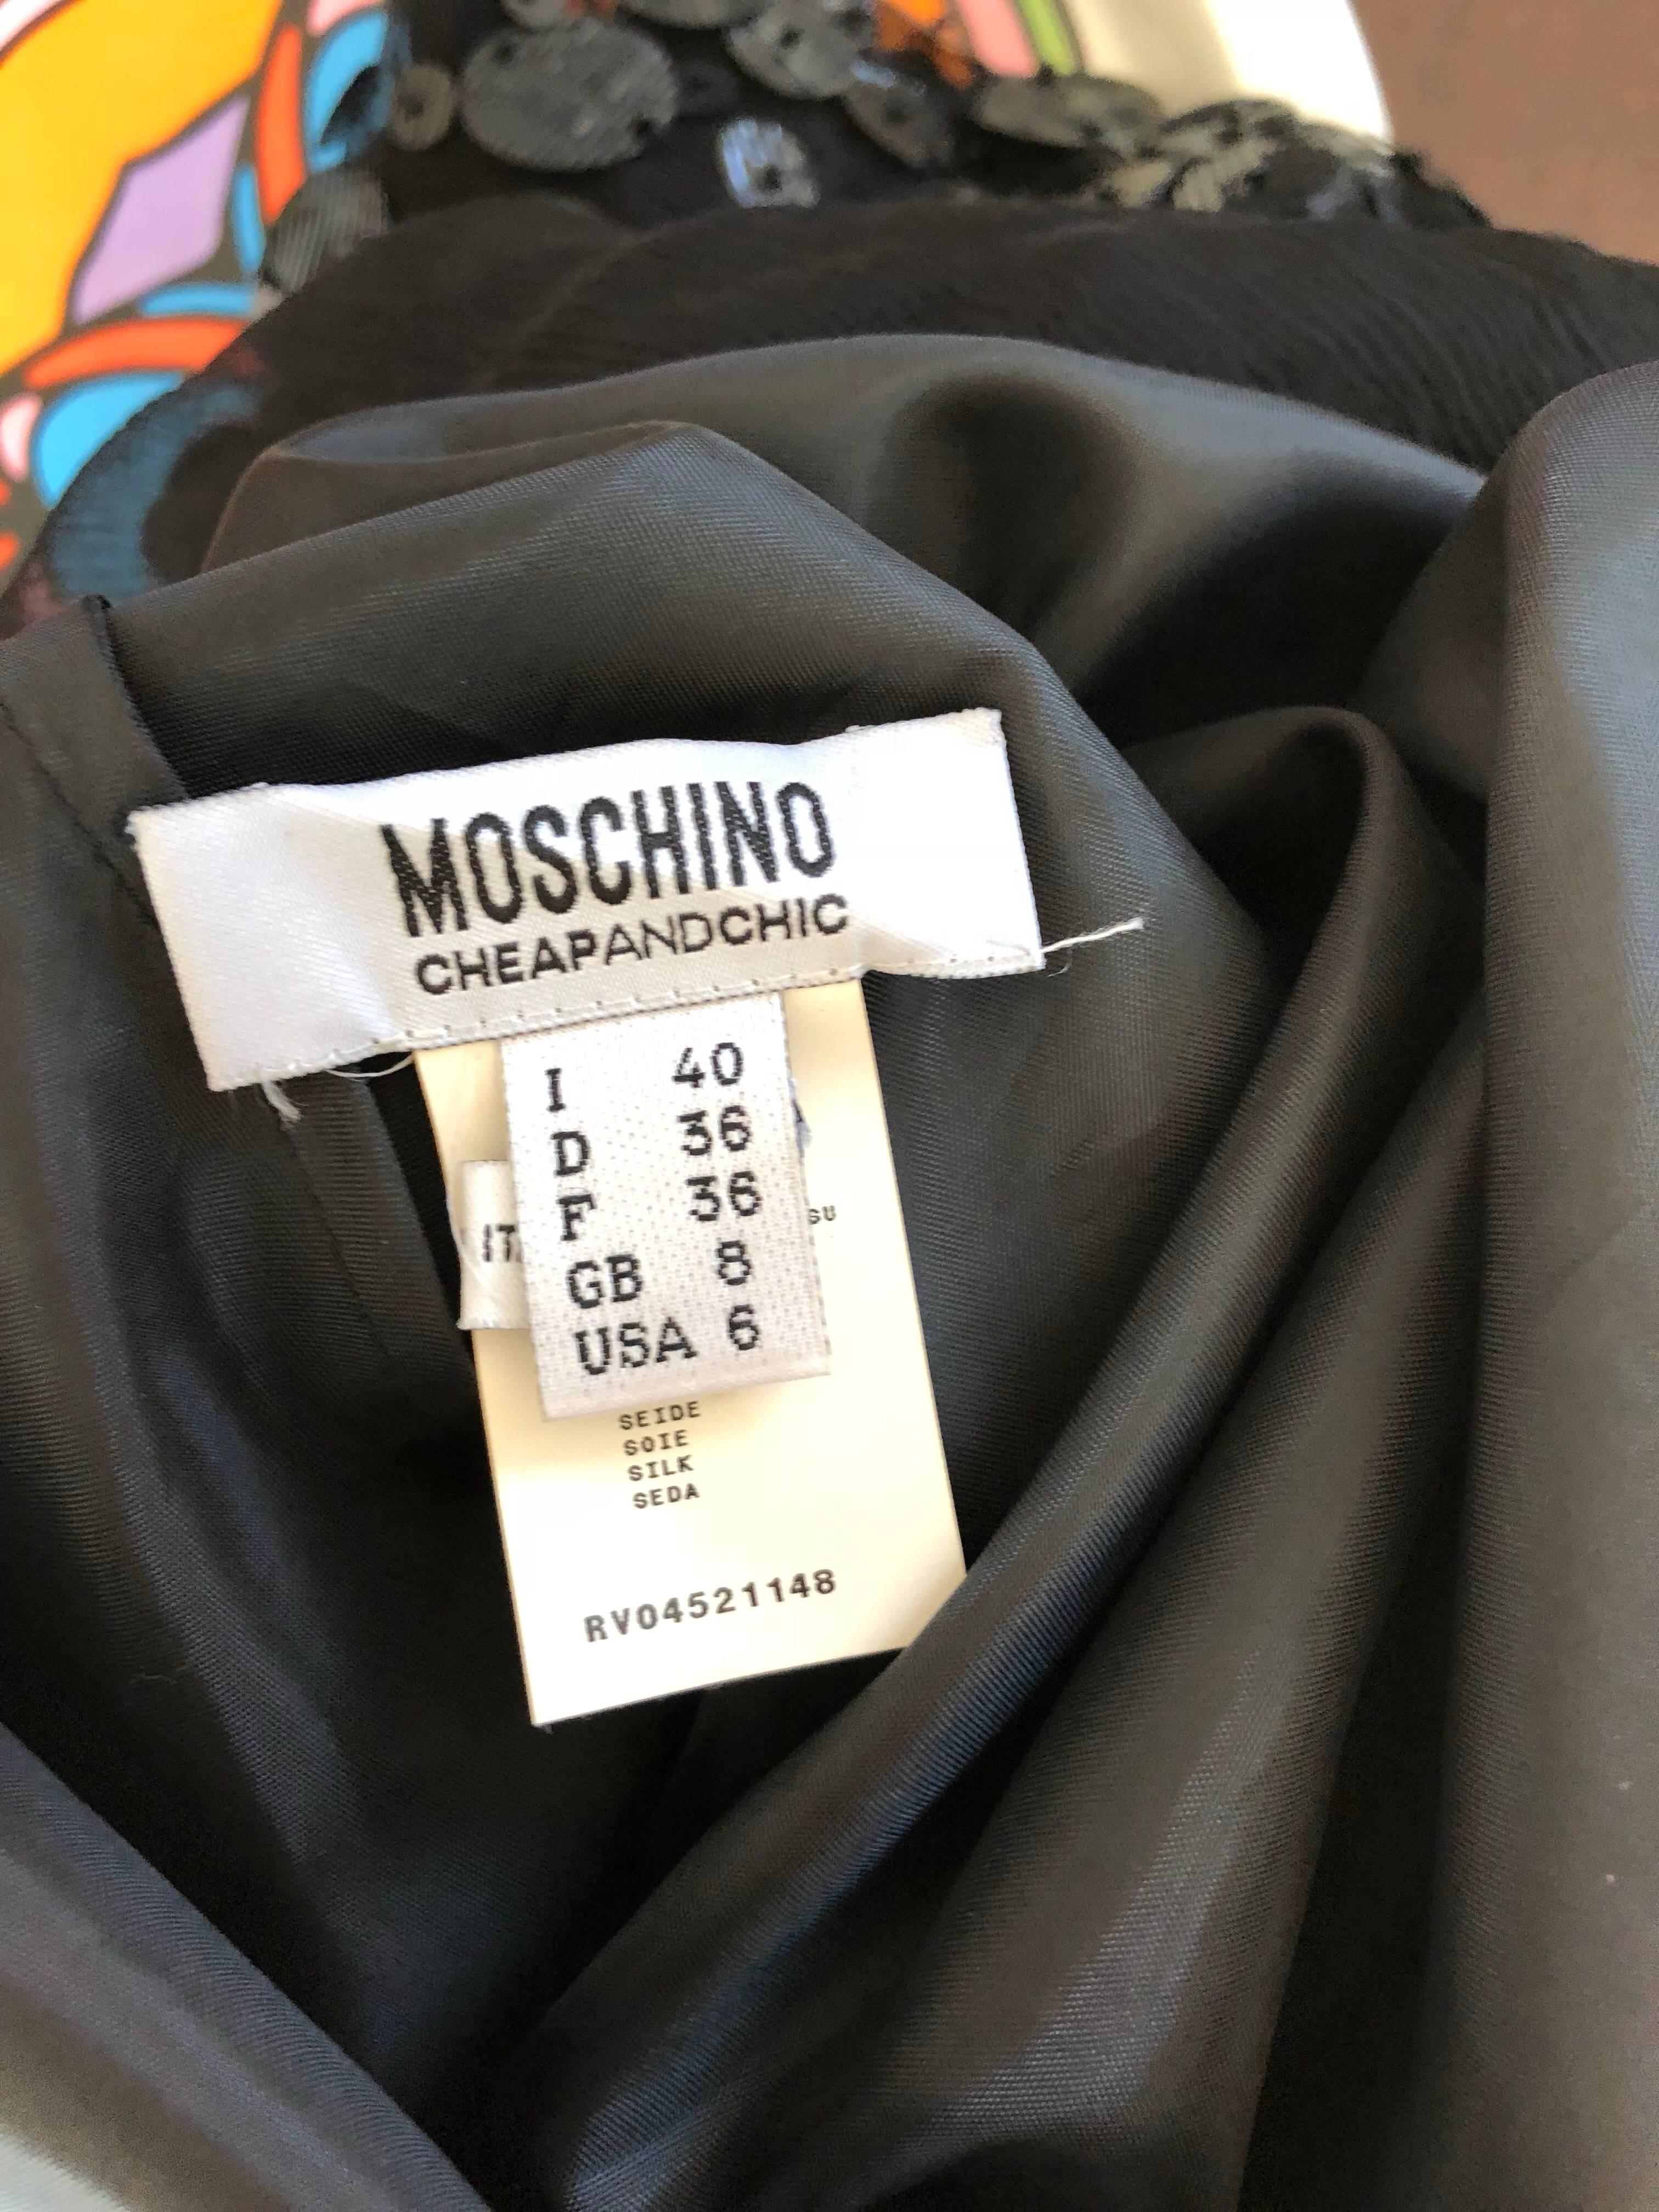 Moschino Cheap & Chic 1990s Black Size 6 Chiffon Paillettes Sequin Vintage Dress For Sale 5